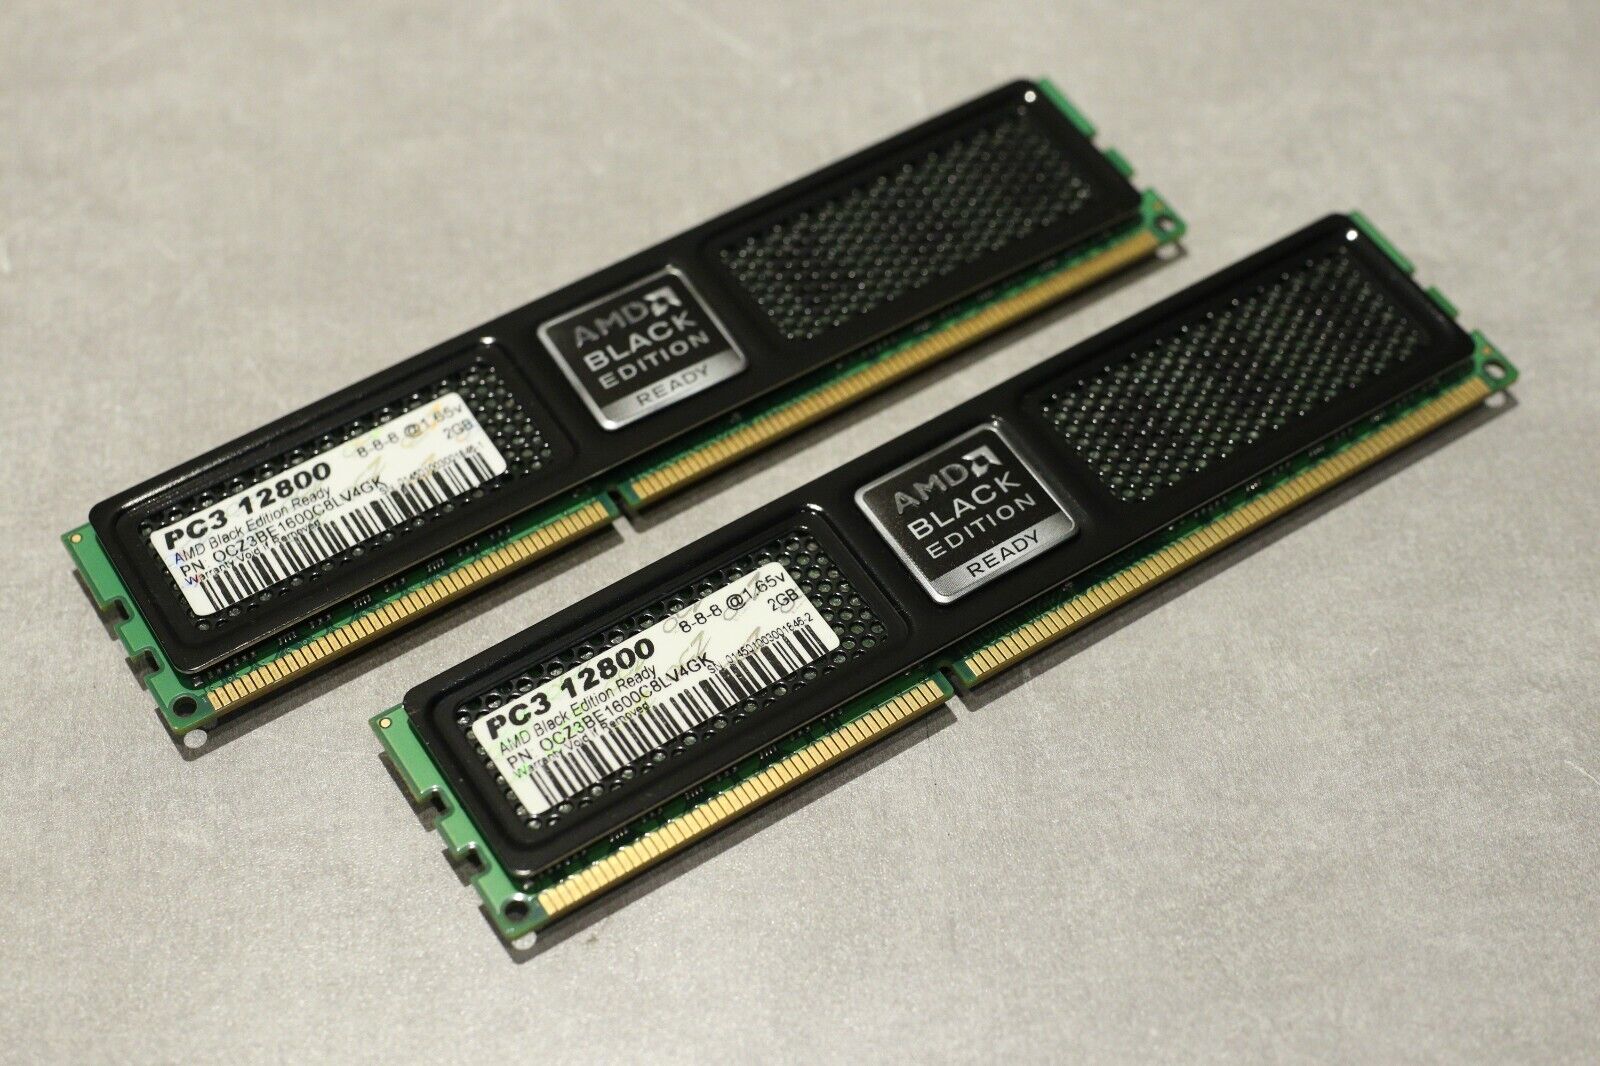 OCZ AMD Black Edition 4GB (2 x 2GB) DDR3 1600 MHz (PC3 12800) OCZ3BE1600C8LV4GK